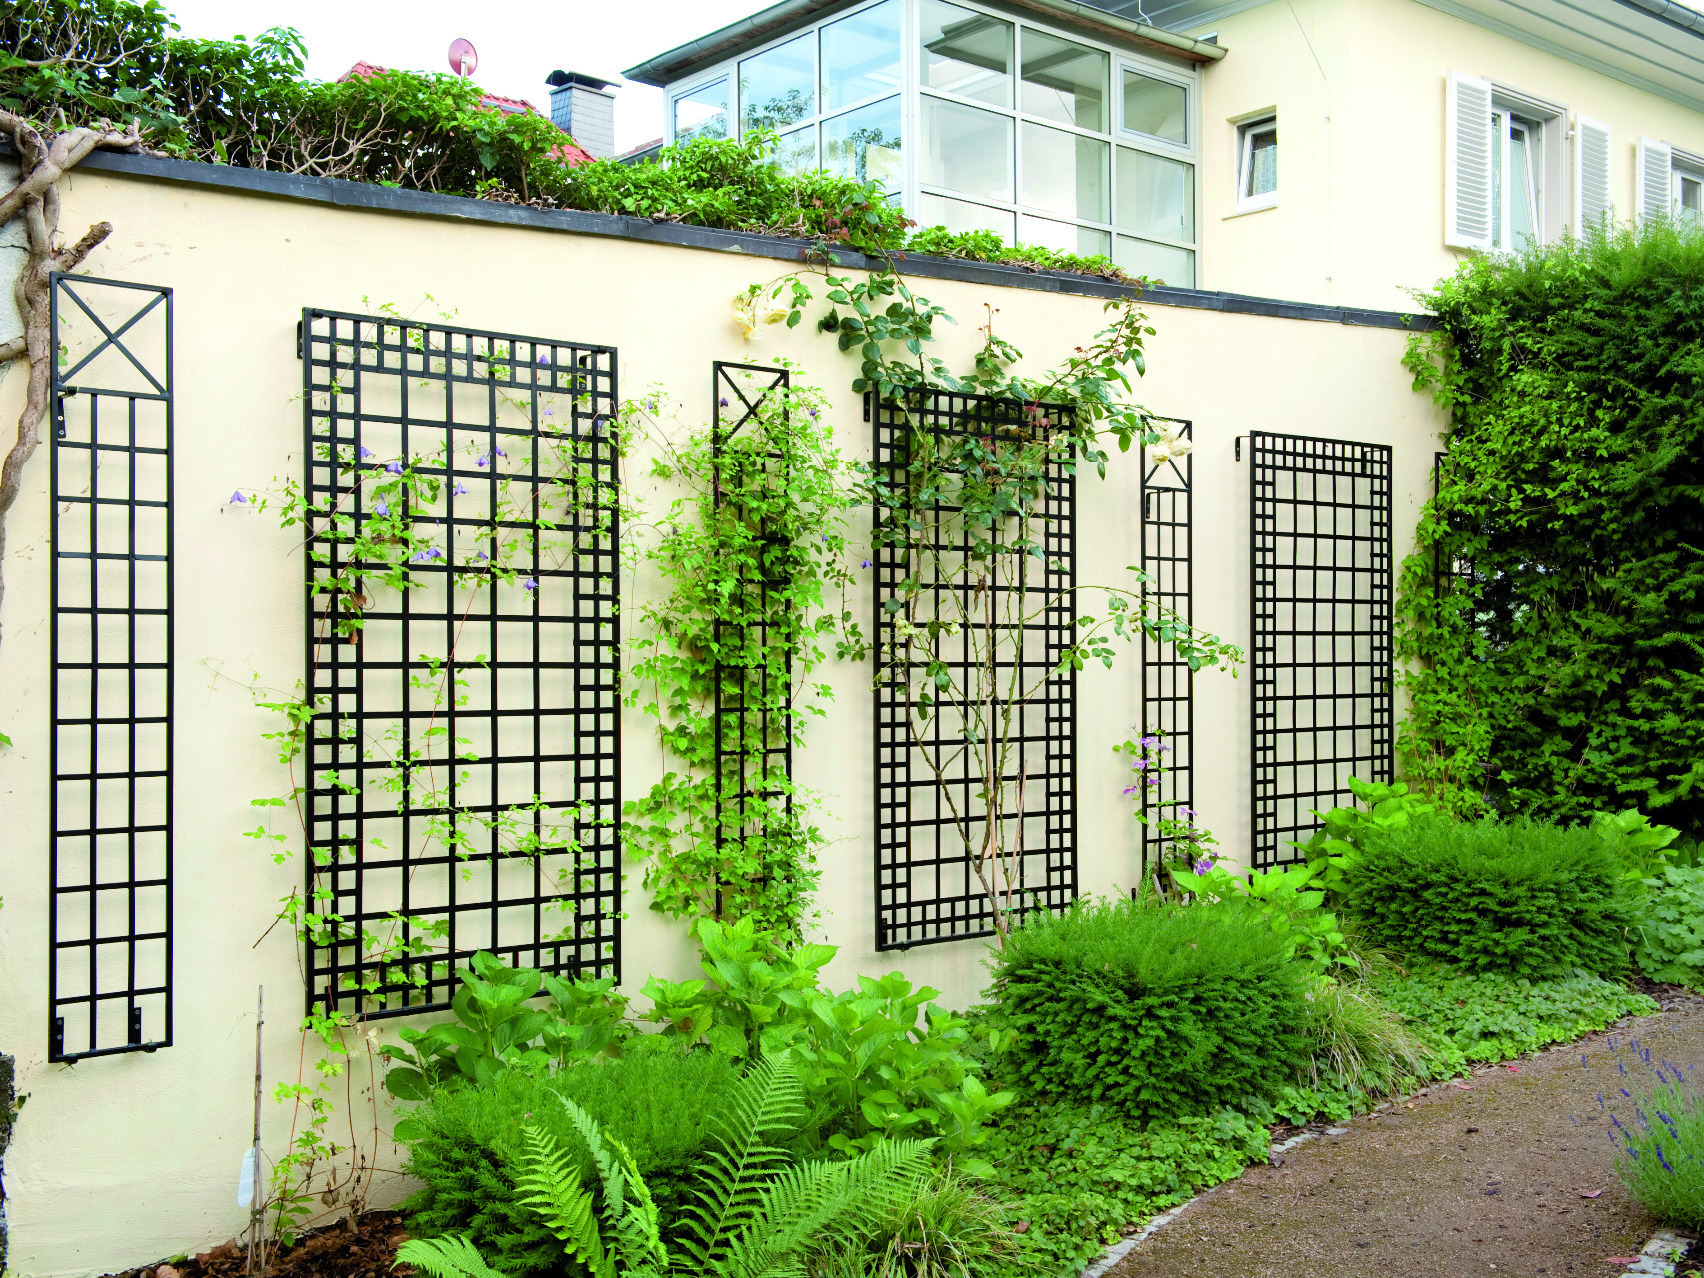 Classic Garden Elements Poundbury Wall Trellis 200cm H x 100cm W. Supply & Installation services nationwide. Tel 087-2306 128